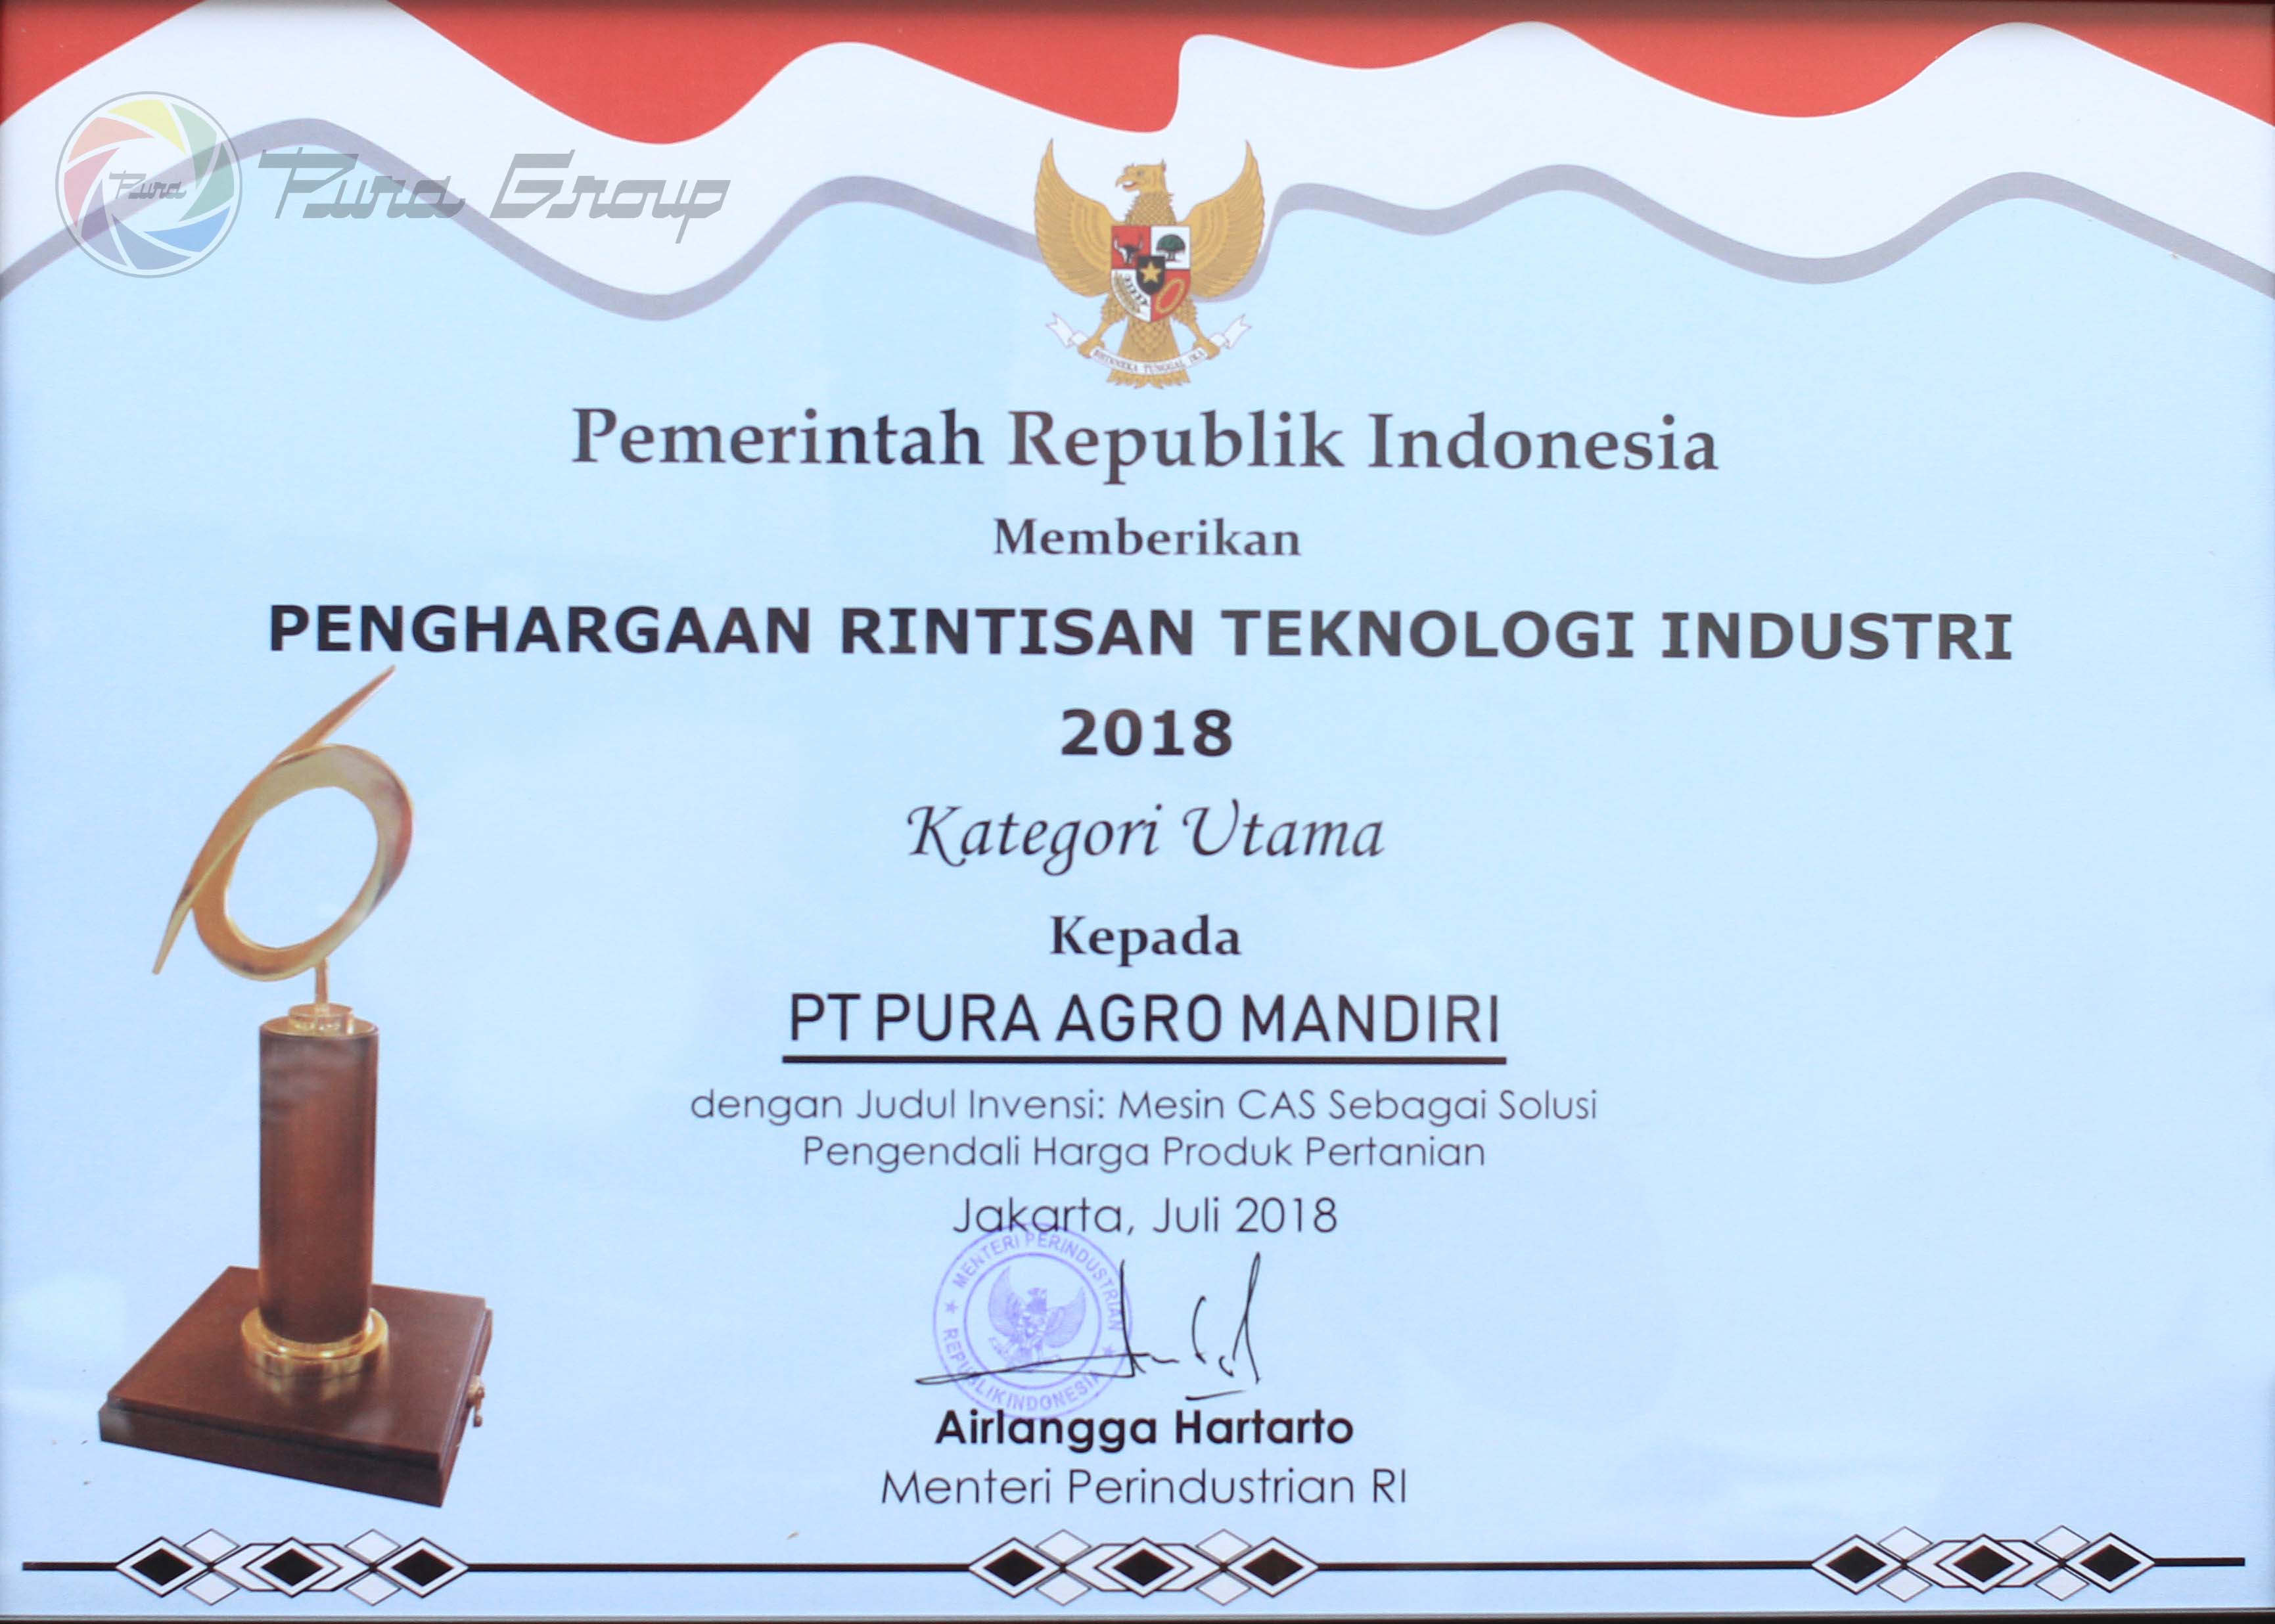 Industrial Technology Pioneer Award 2018